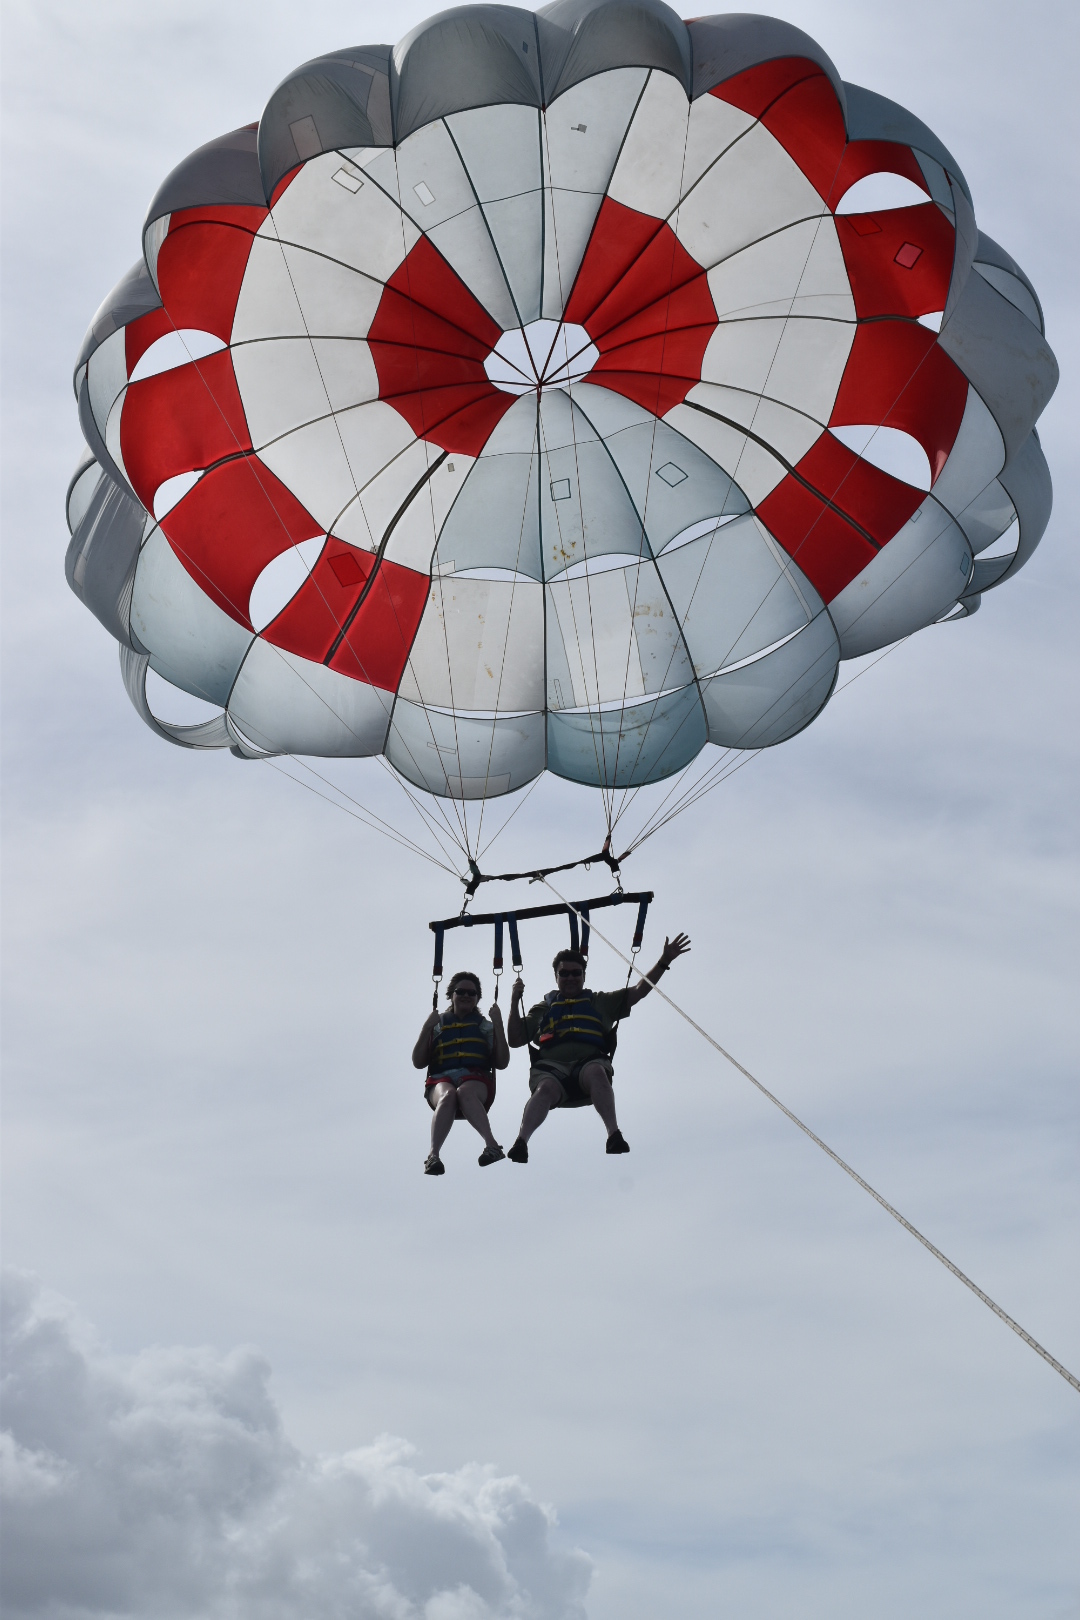 A and J Adventure parasailing, Fajardo, Puerto Rico